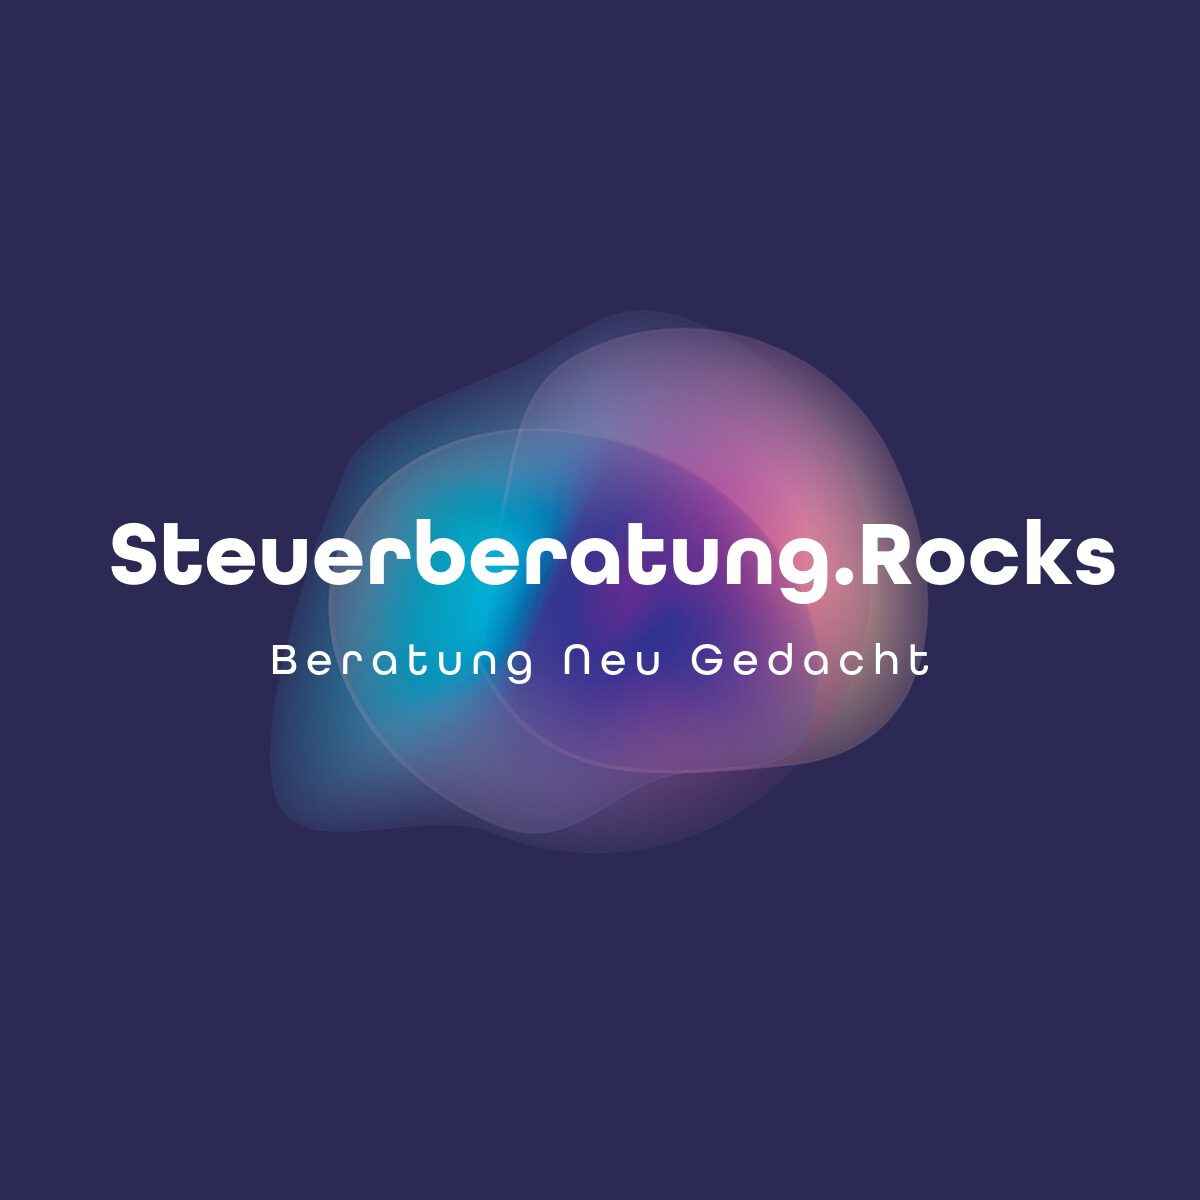 STEUERBERATUNG.ROCKS